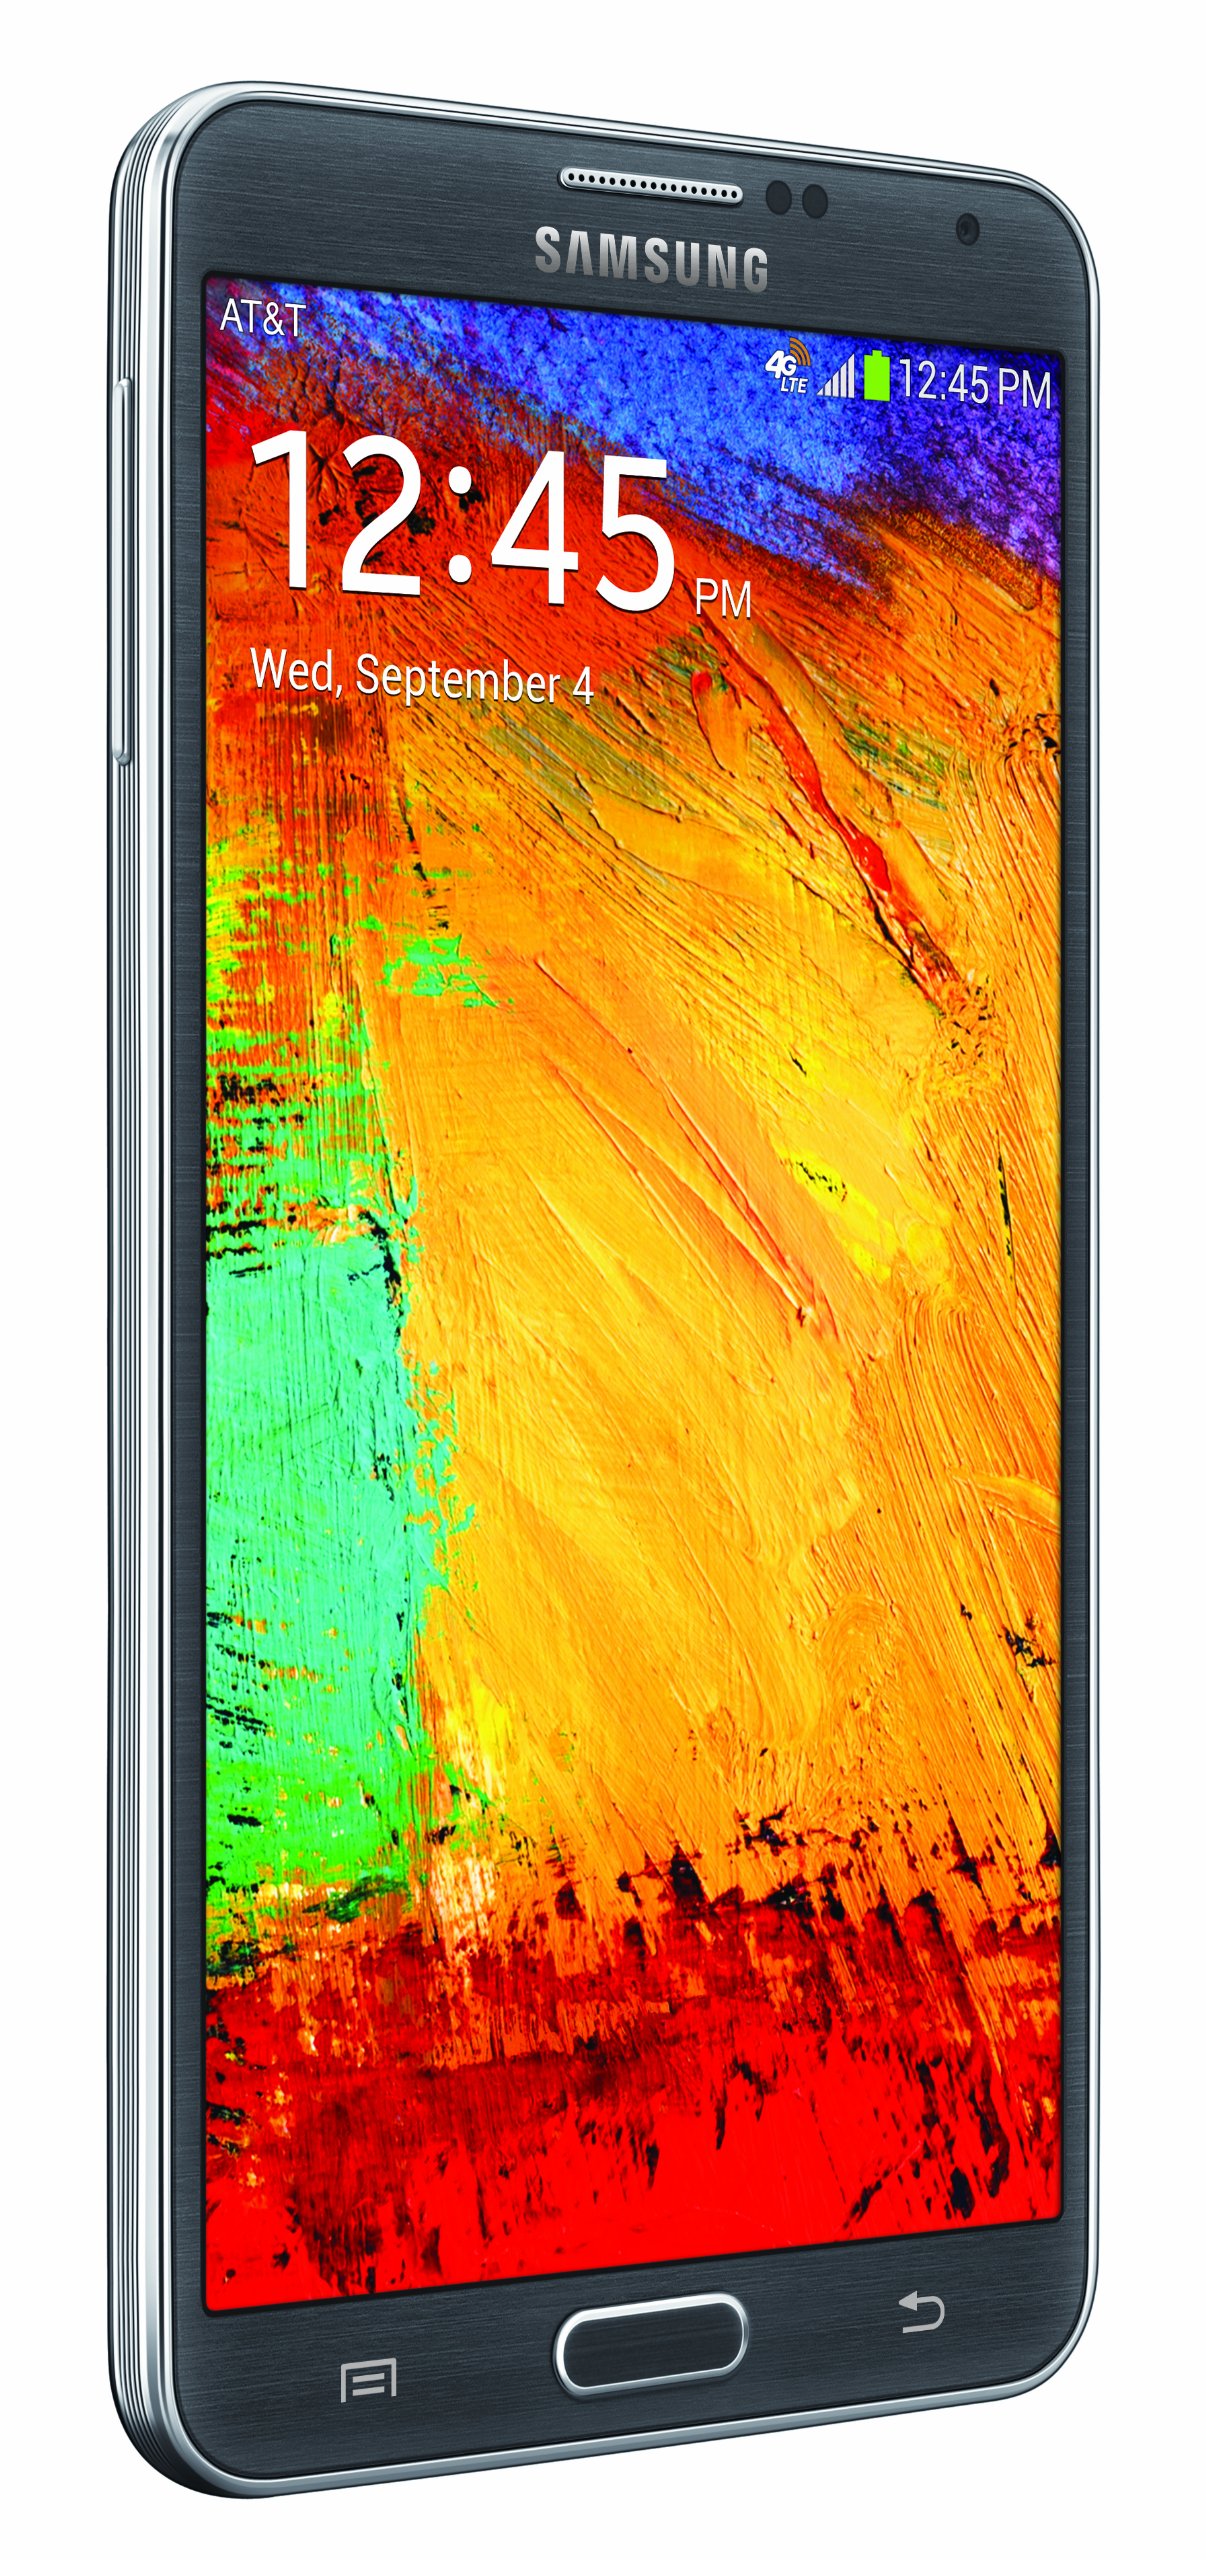 Samsung Galaxy Note 3, Black 32GB (AT&T)